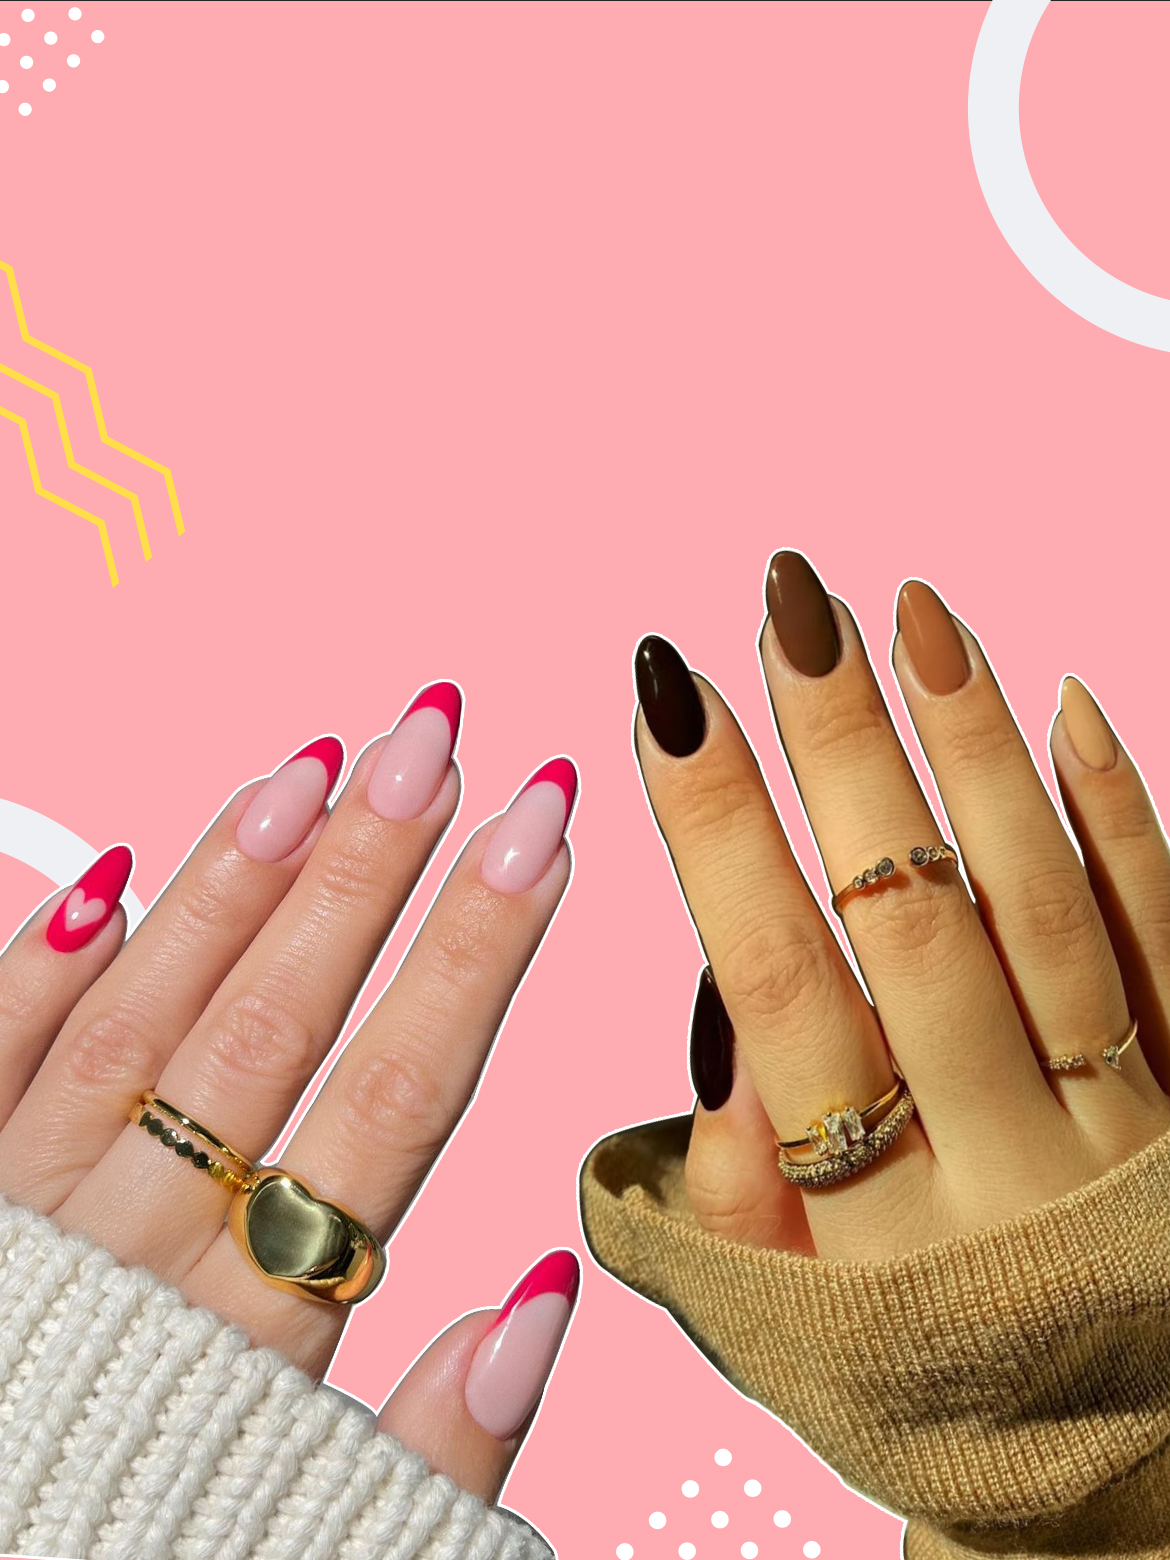 How to avoid yellow nails from nail polish? – Le Mini Macaron